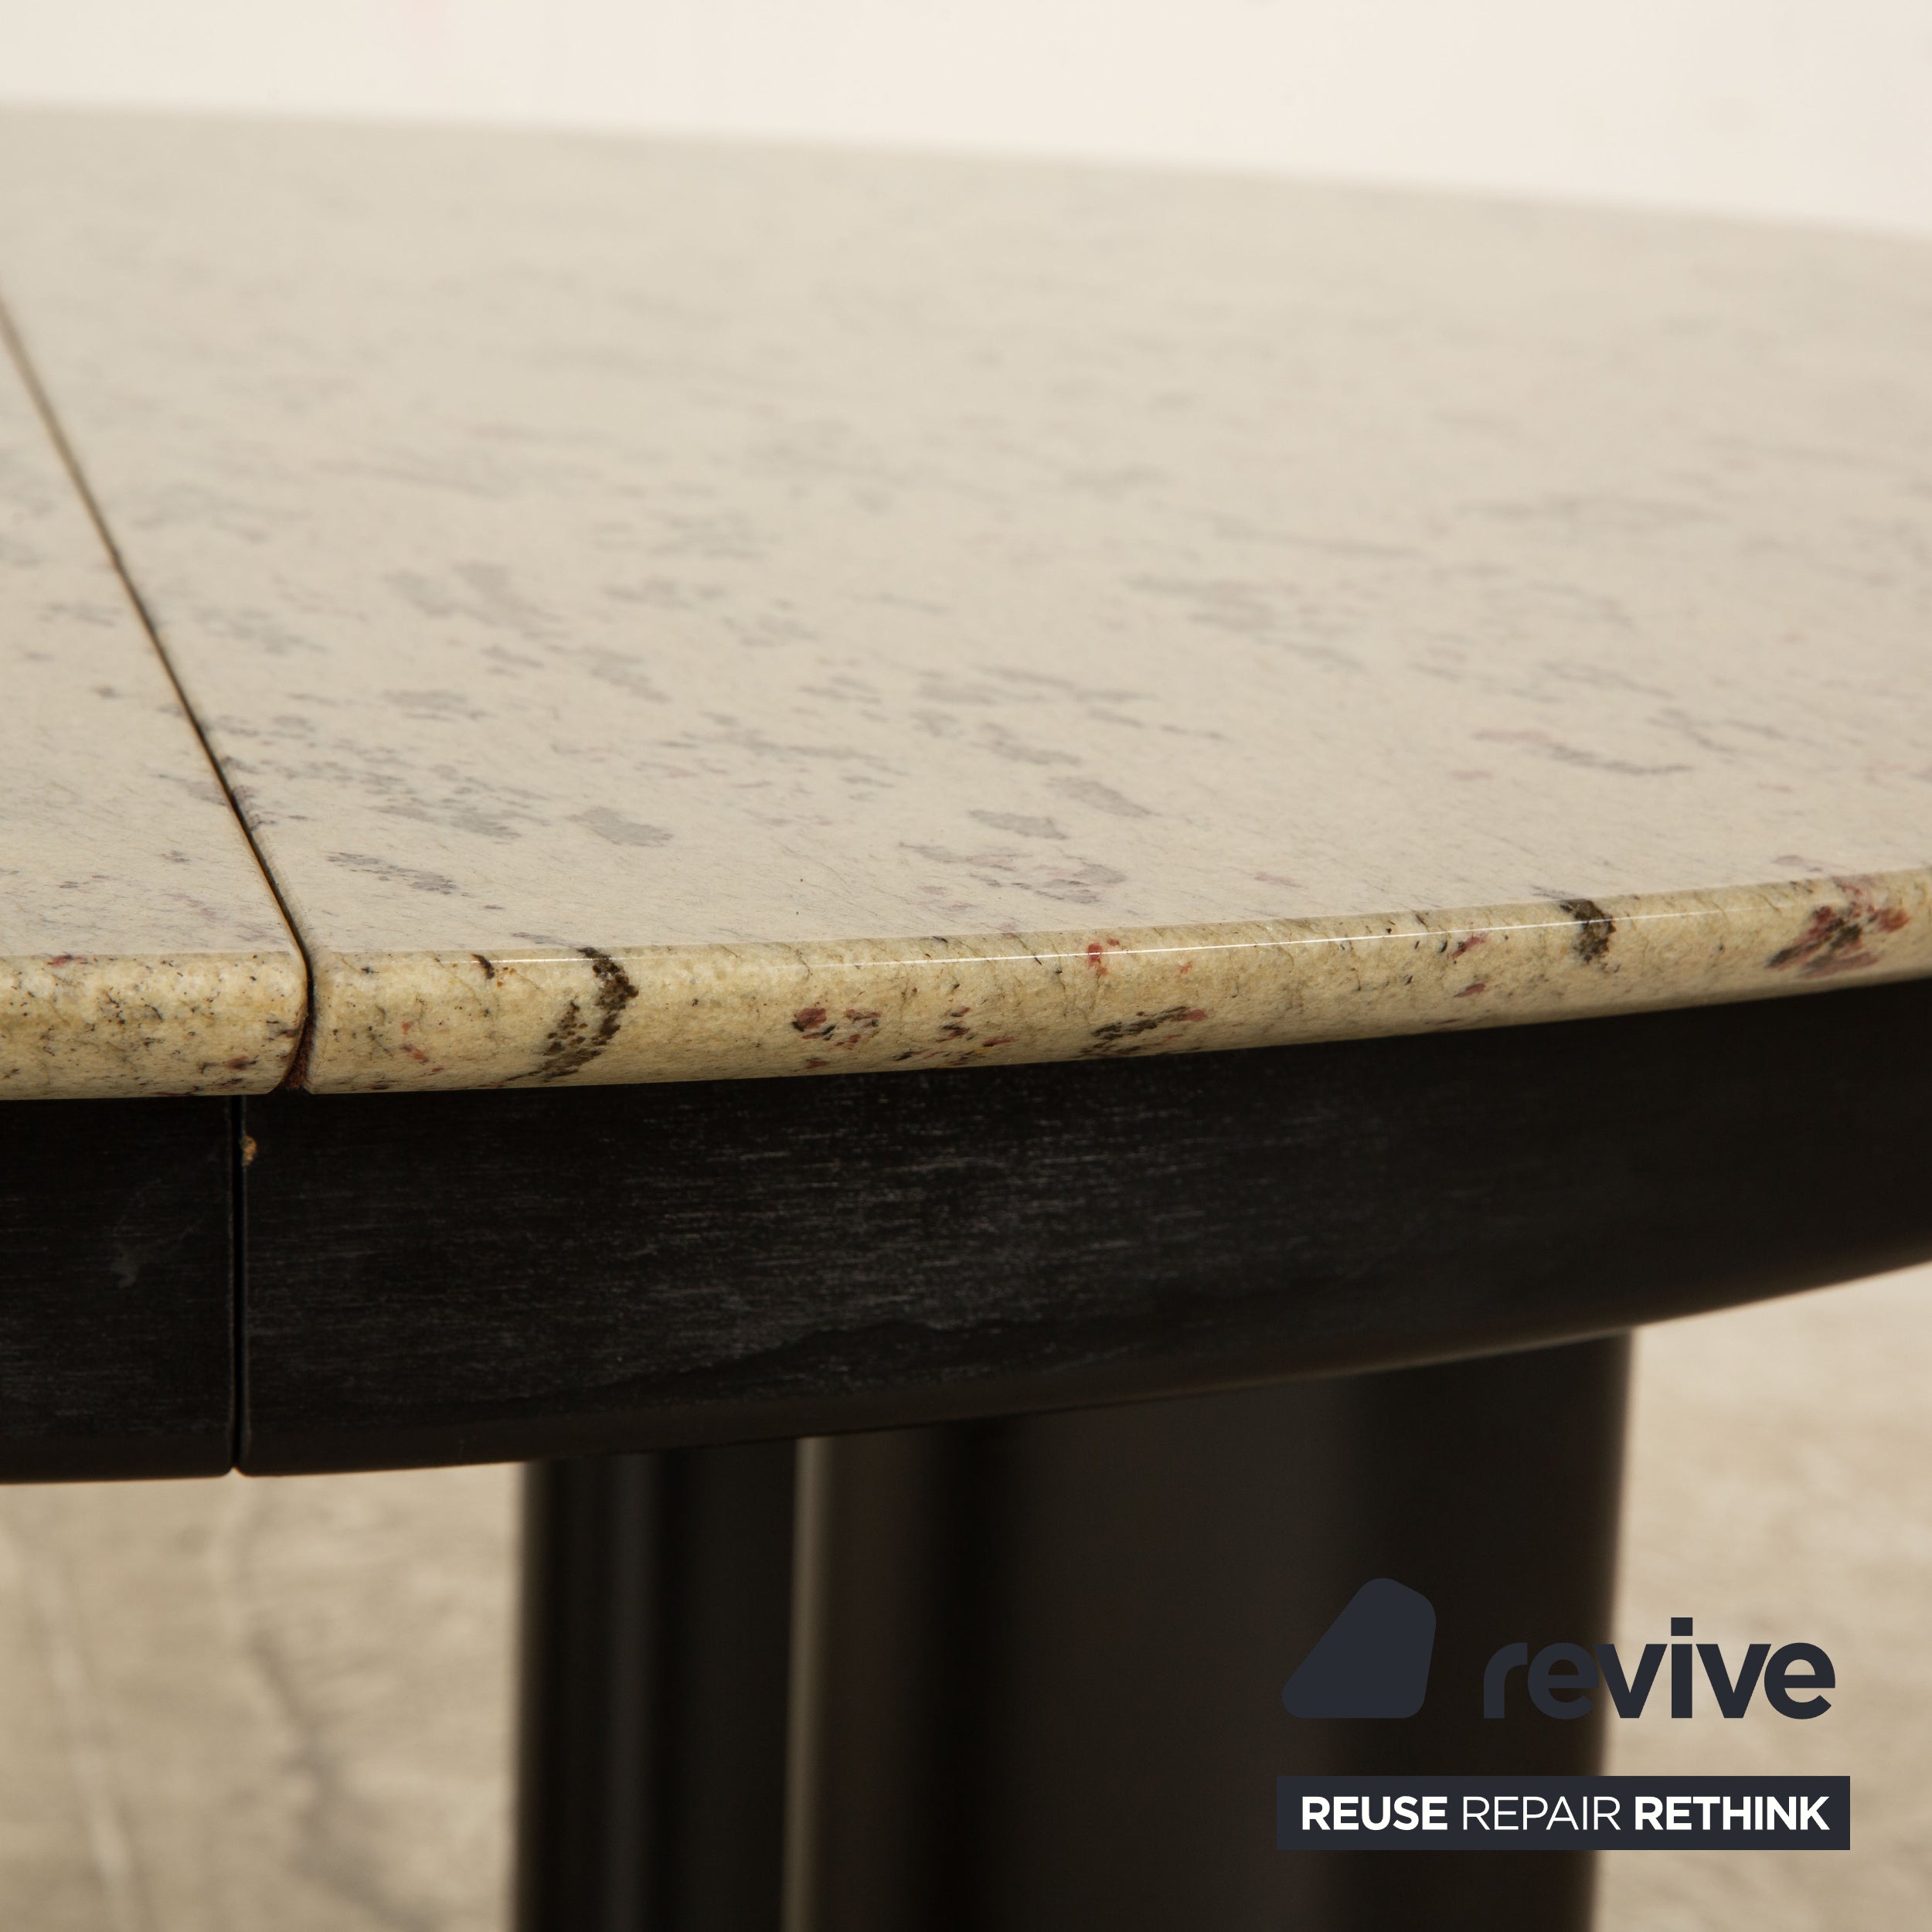 Draenert 1226 stone dining table gray black extendable 125/225 x 74 x 125